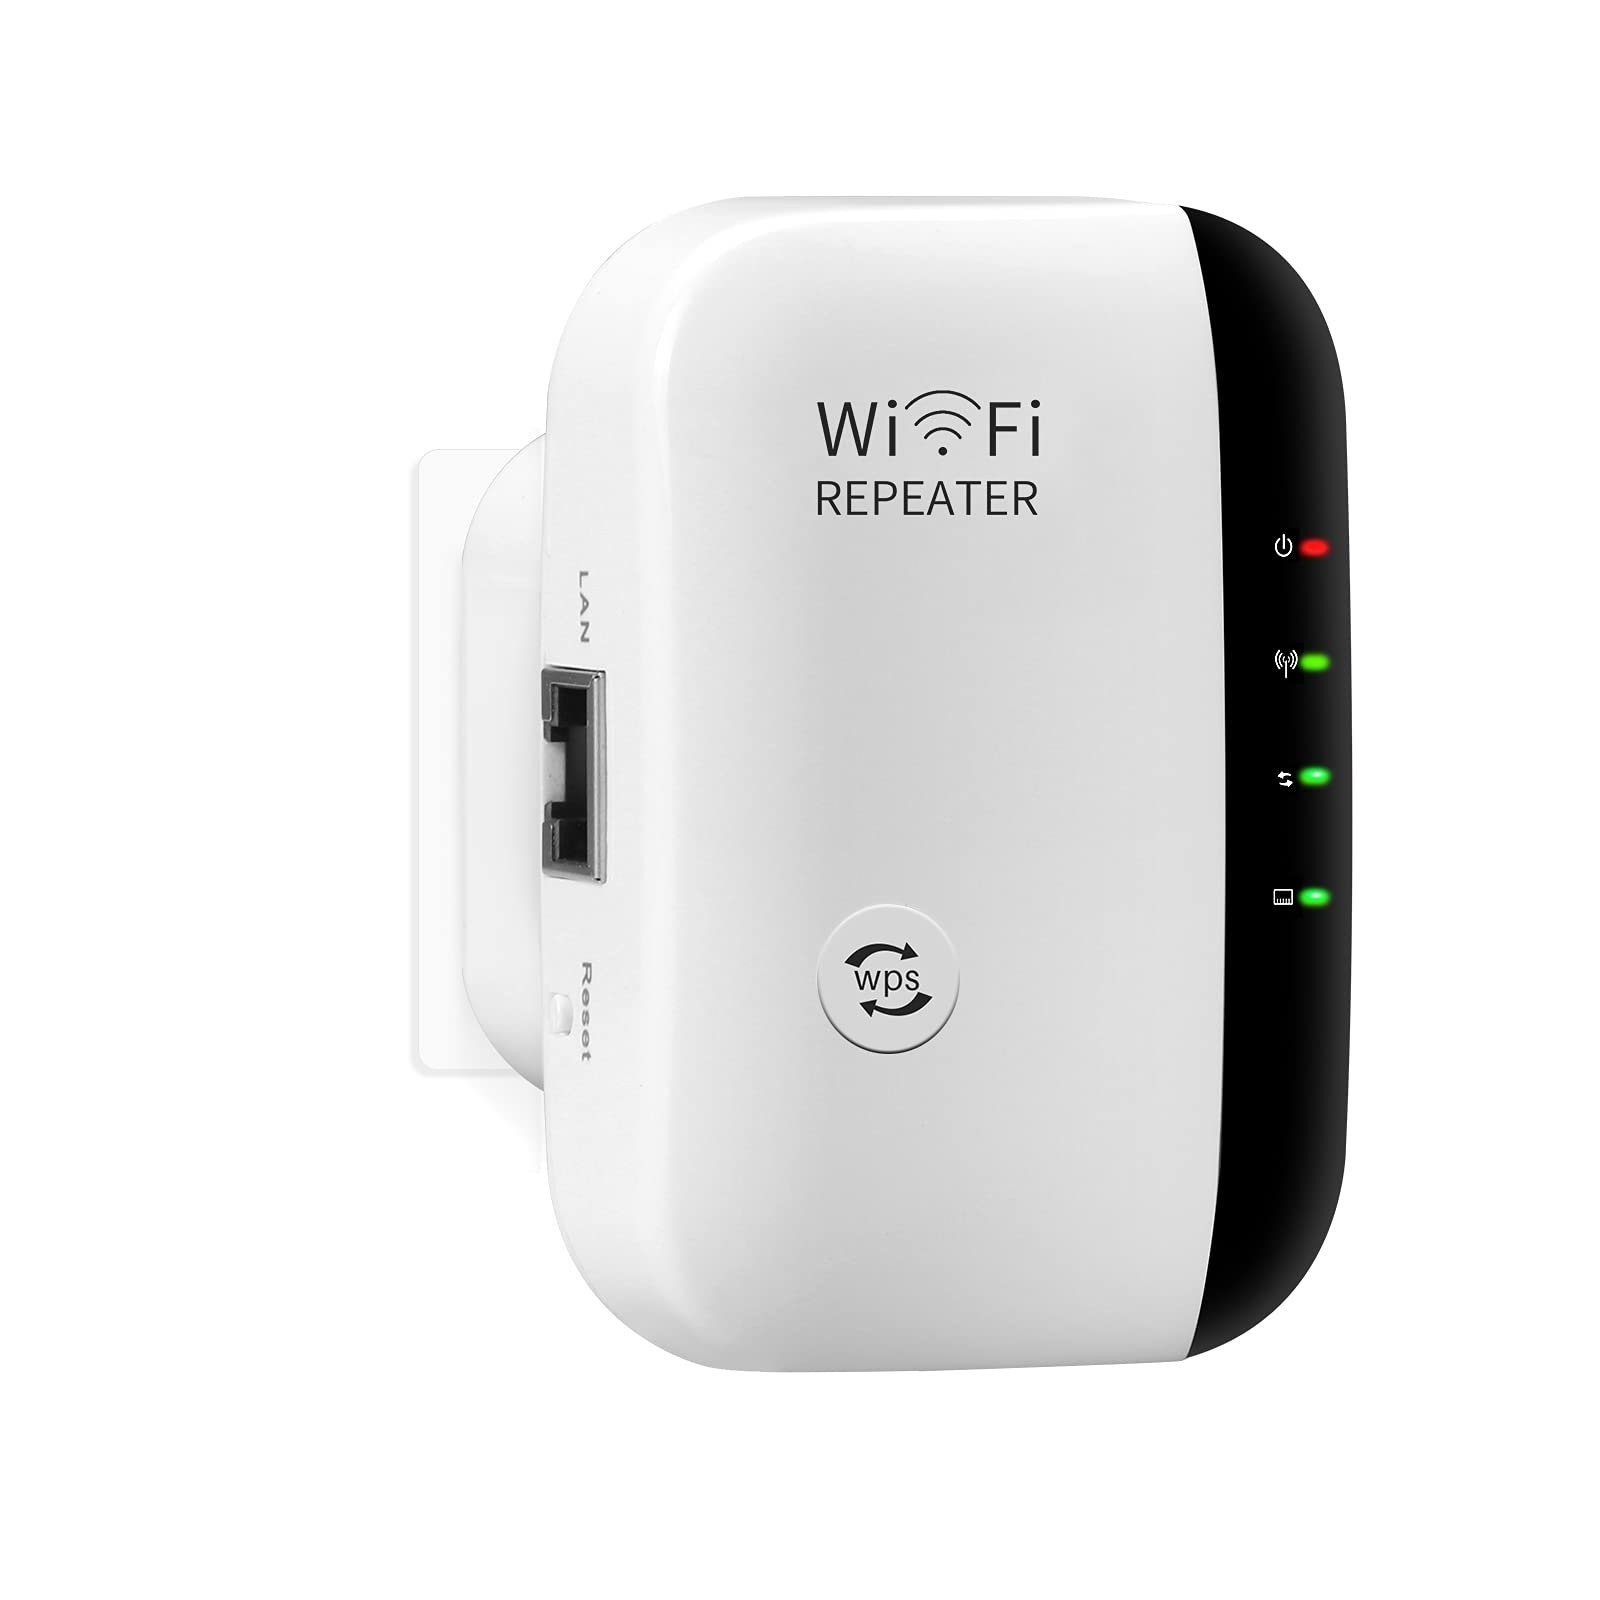 Housruse Repeater/Verstärker WLAN 2,4 GHz mit Repeater-Modus, Access Point,  LAN-Port-Funktion Kompatibel mit allen WLAN-Geräten WLAN-Repeater